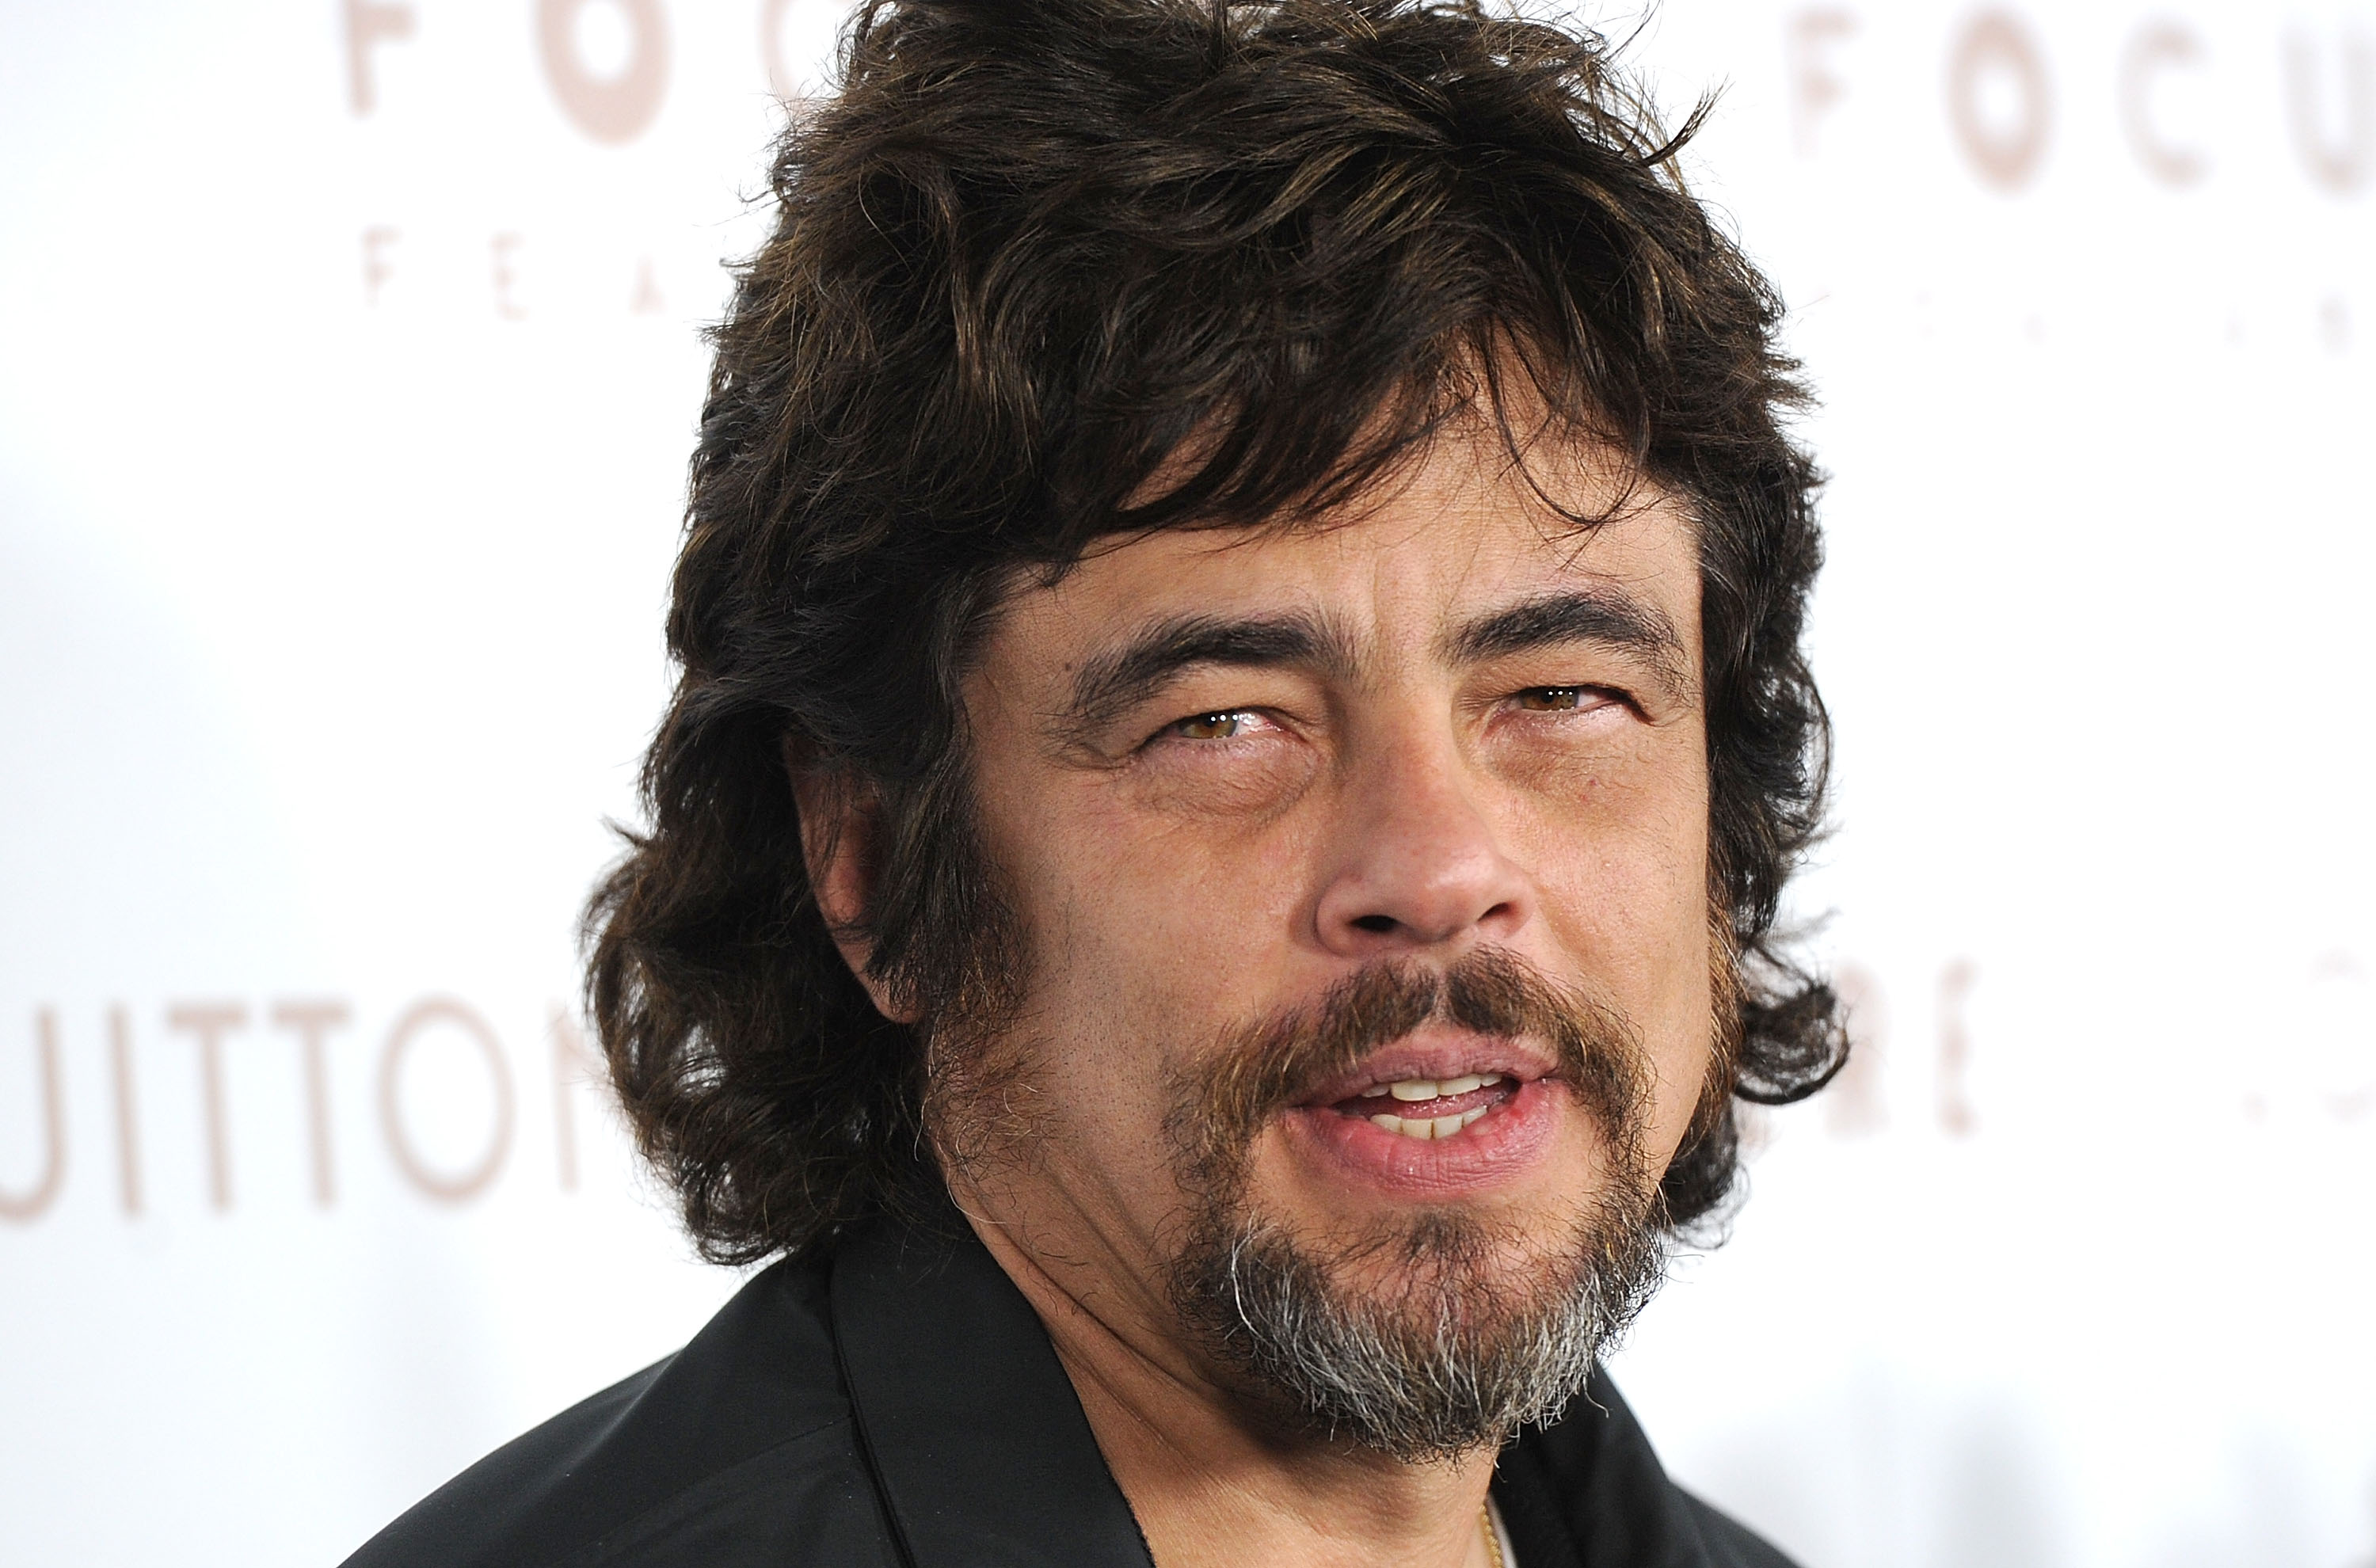 Movie News: Benicio Del Toro to play a lead role in Guardians of the Galaxy